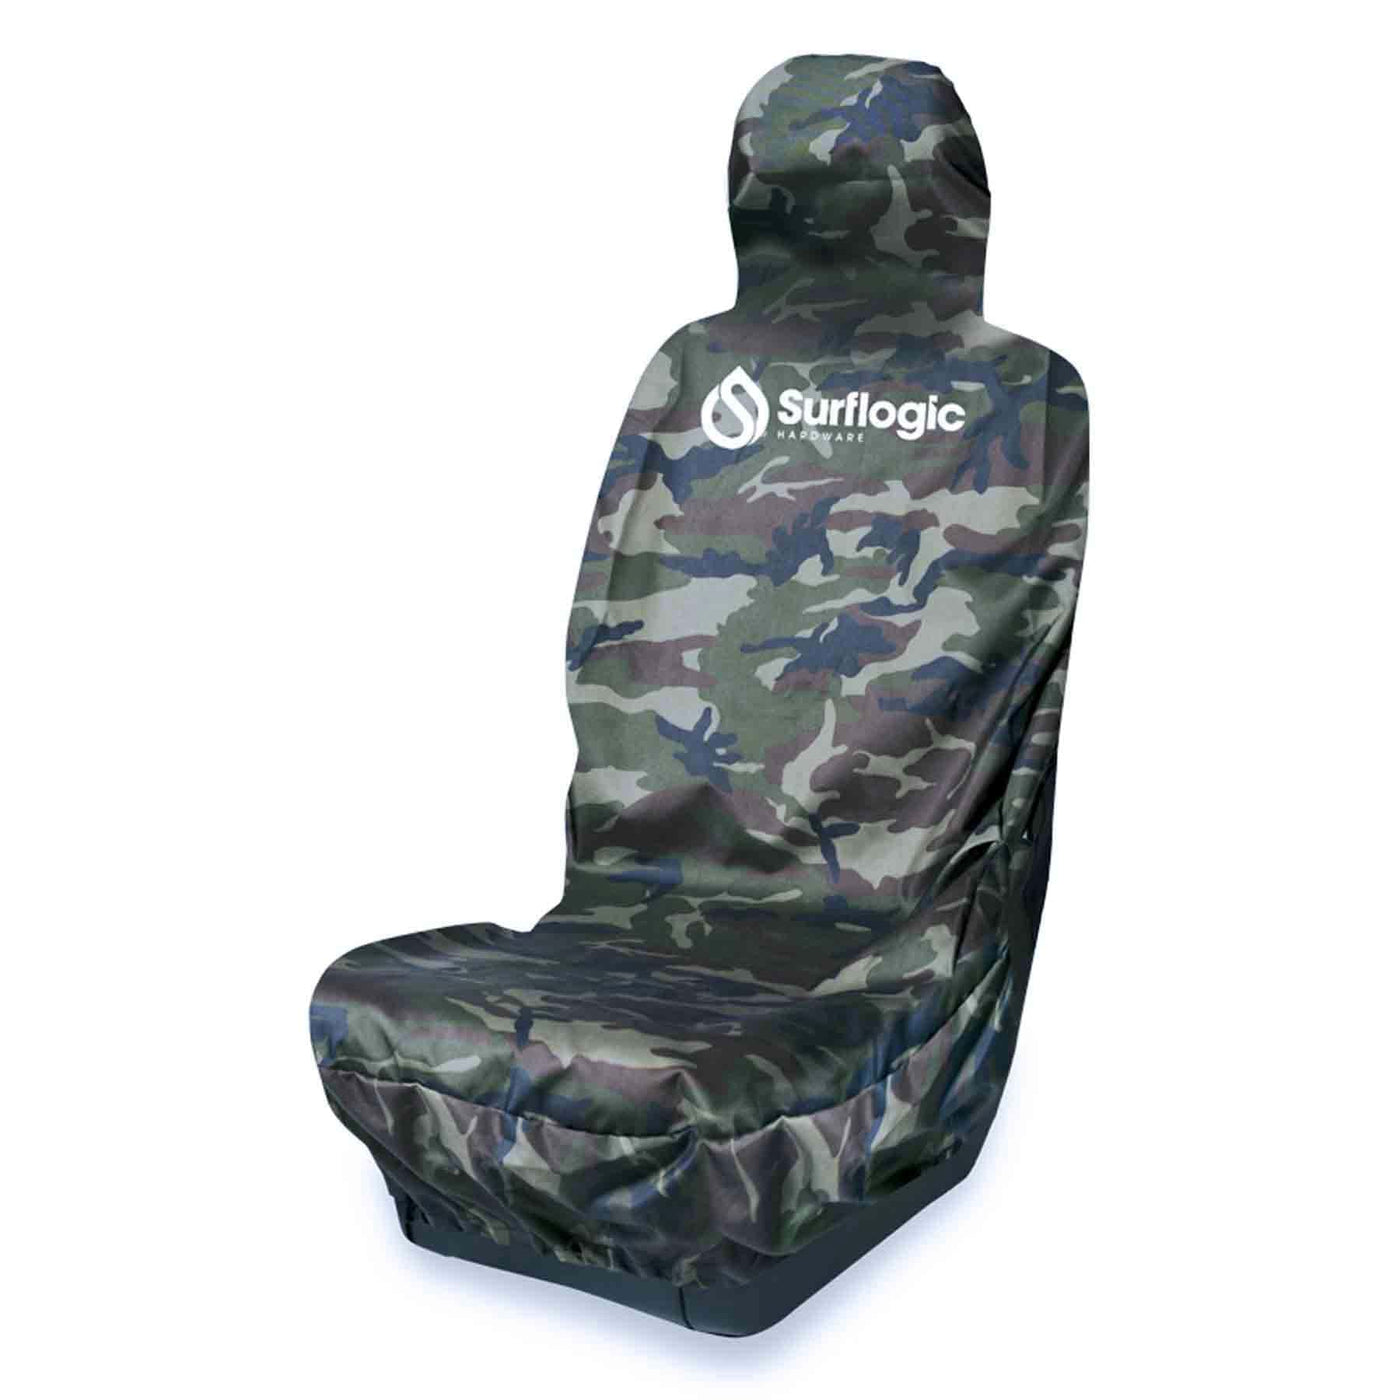 Surflogic Waterproof Car Seat Cover (Camo) Surflogic